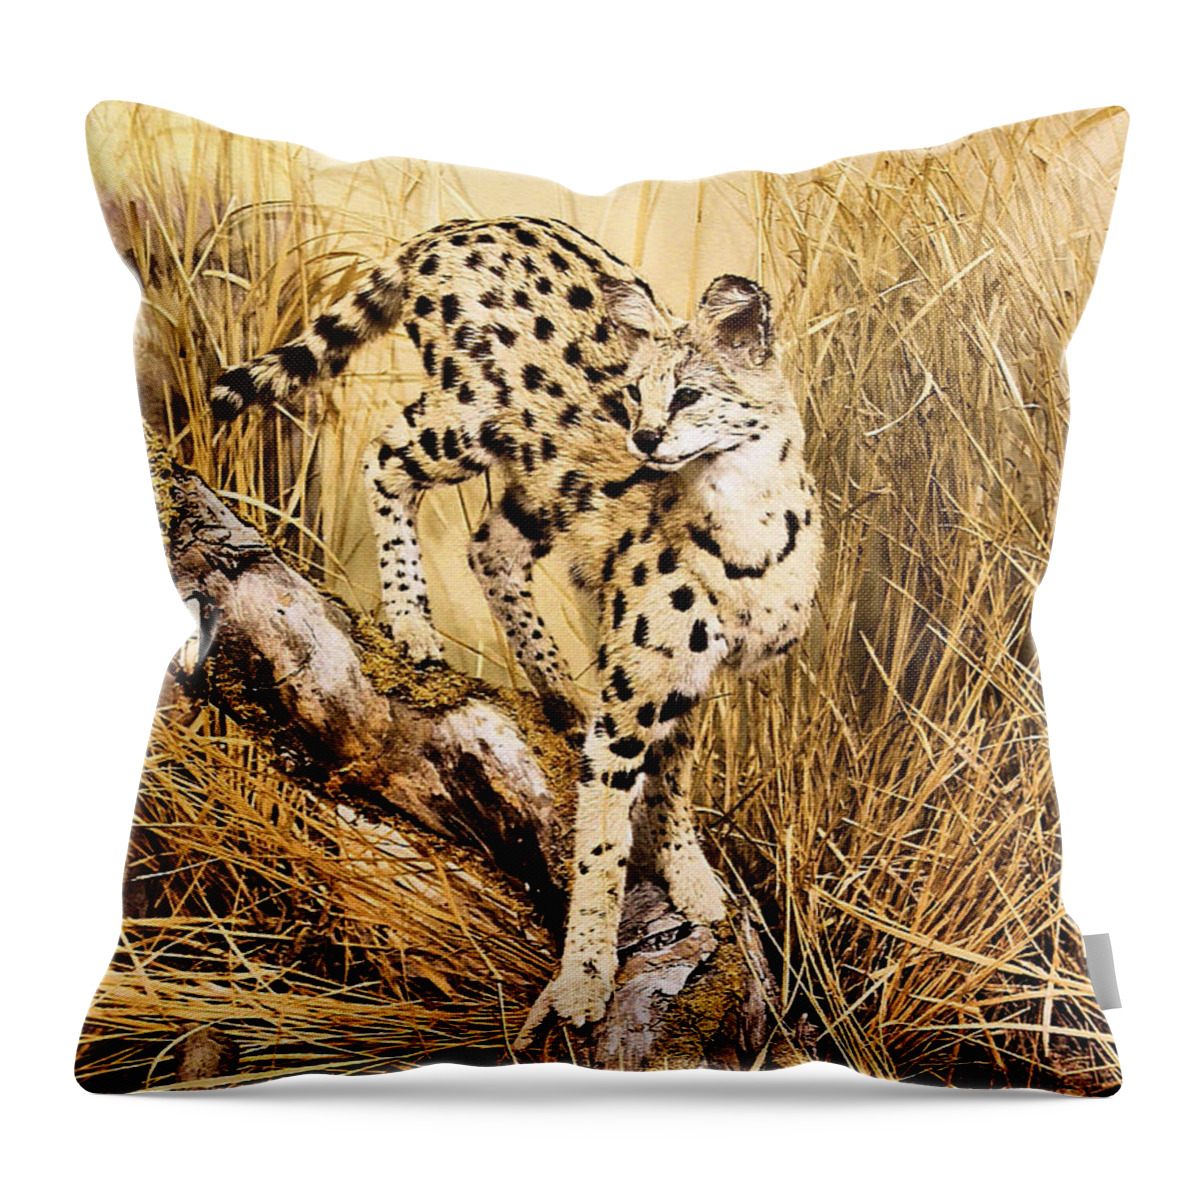 Cheetah Throw Pillow featuring the photograph Painted Cheetah by Kristin Elmquist